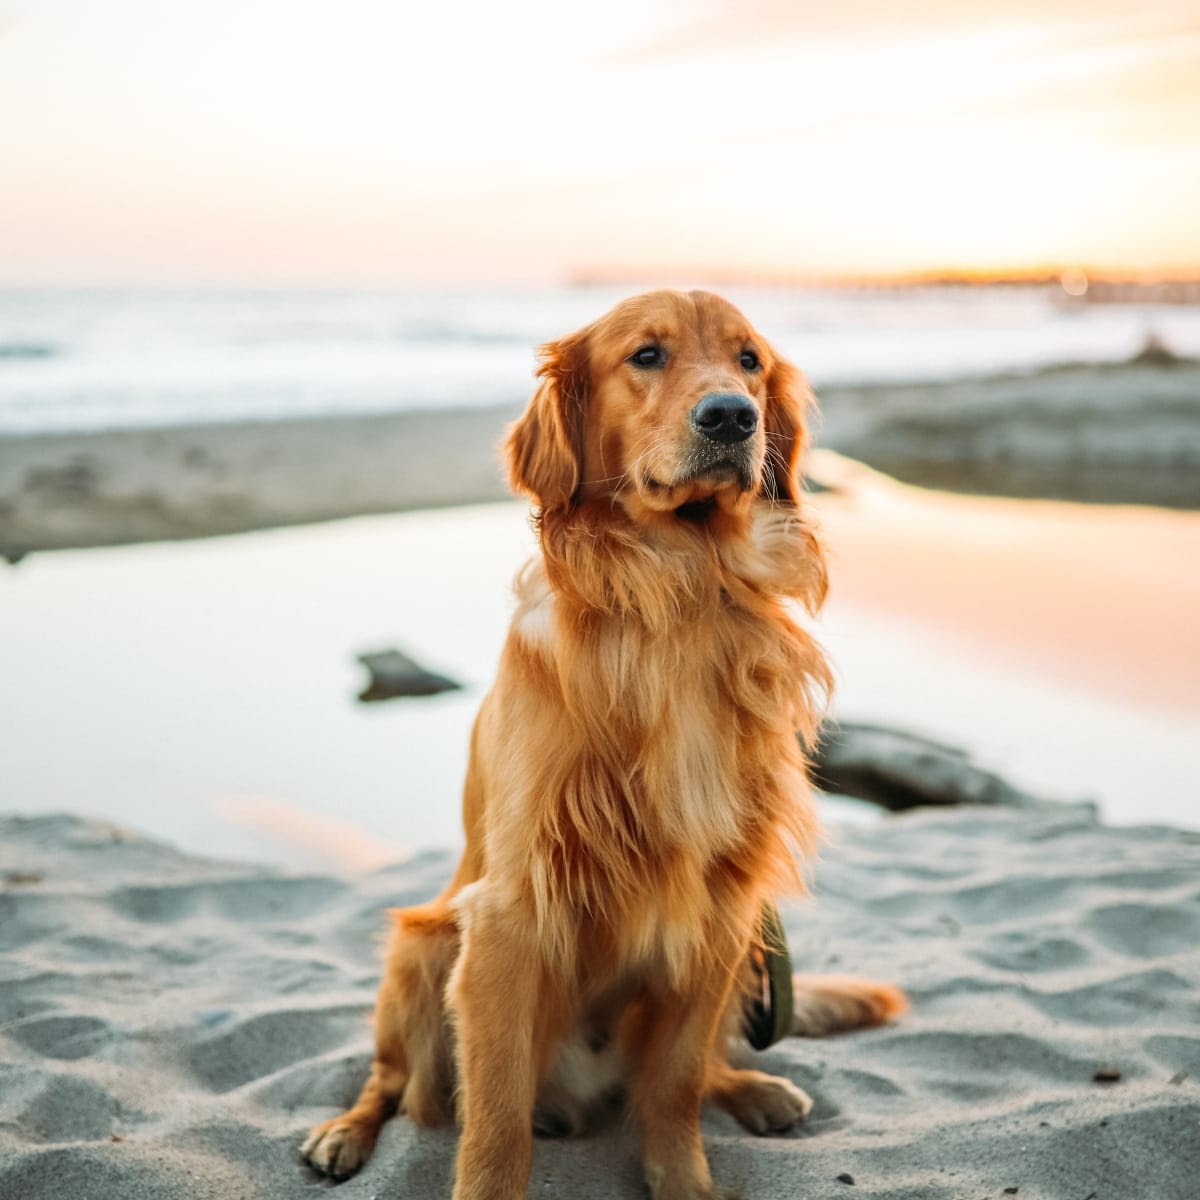 A sitting dog by the beach